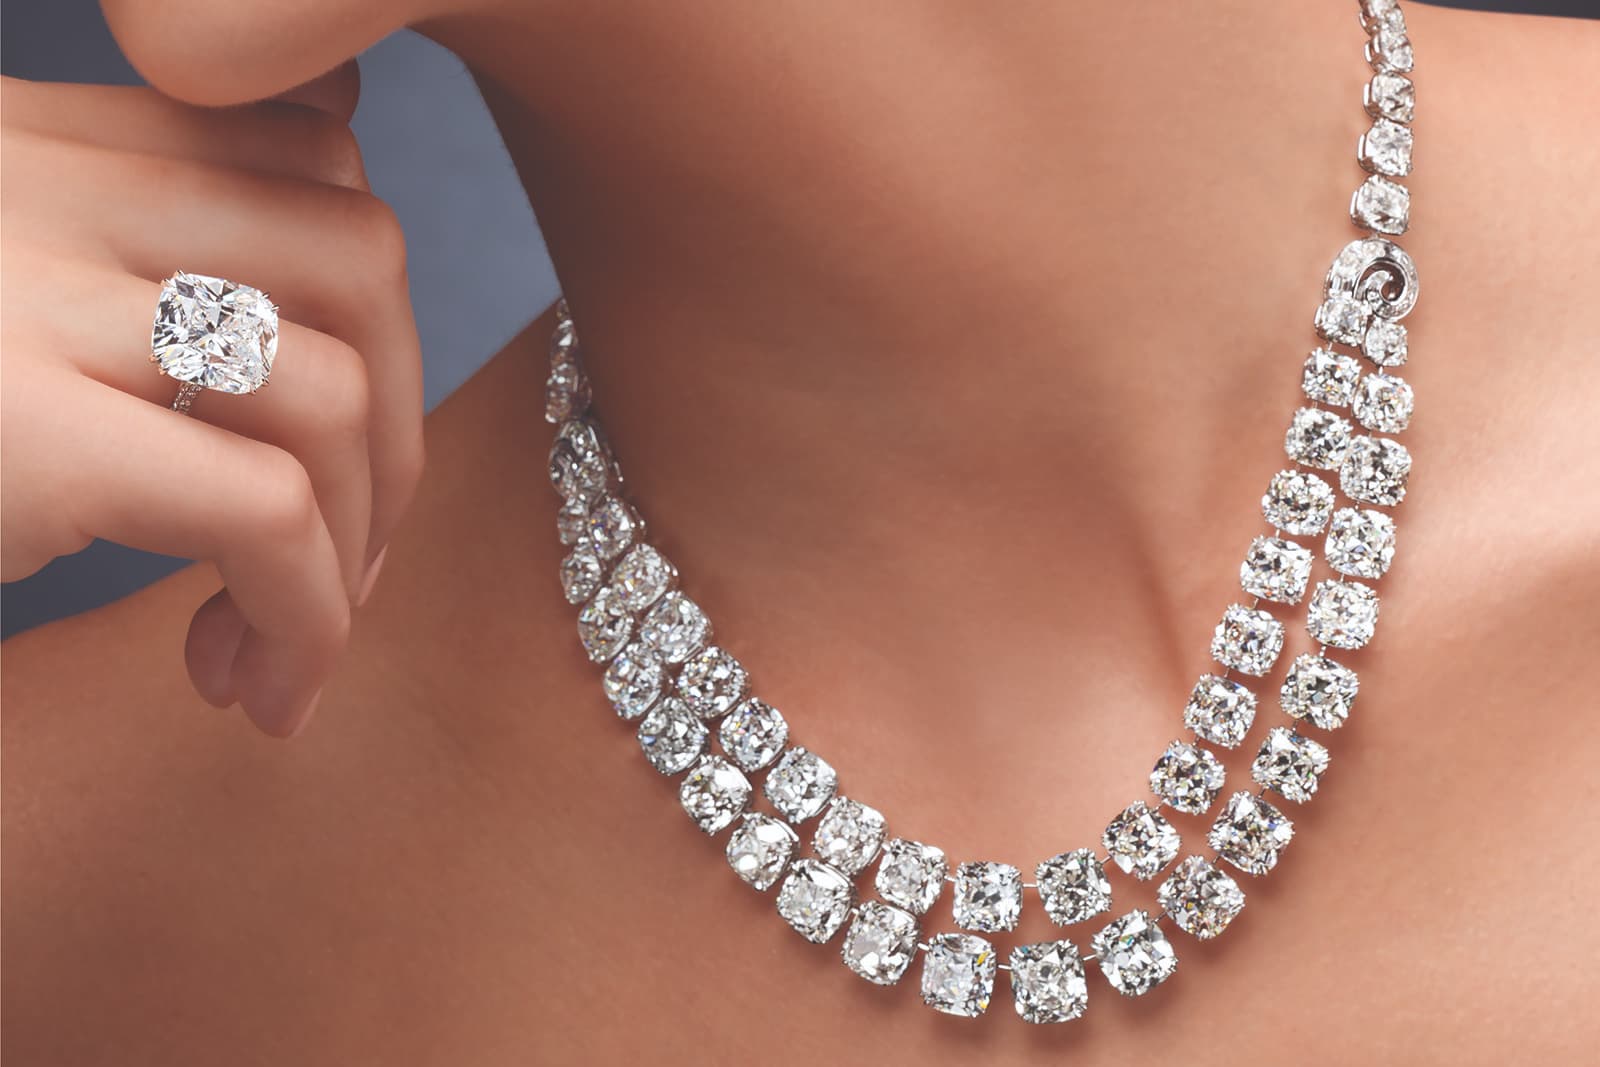 A double row 119.03 carat antique cushion-cut diamond necklace, a 14.28 carat cushion-cut diamond ring, and a pair of 10.20 carat cushion-cut diamond earrings by Ronald Abram